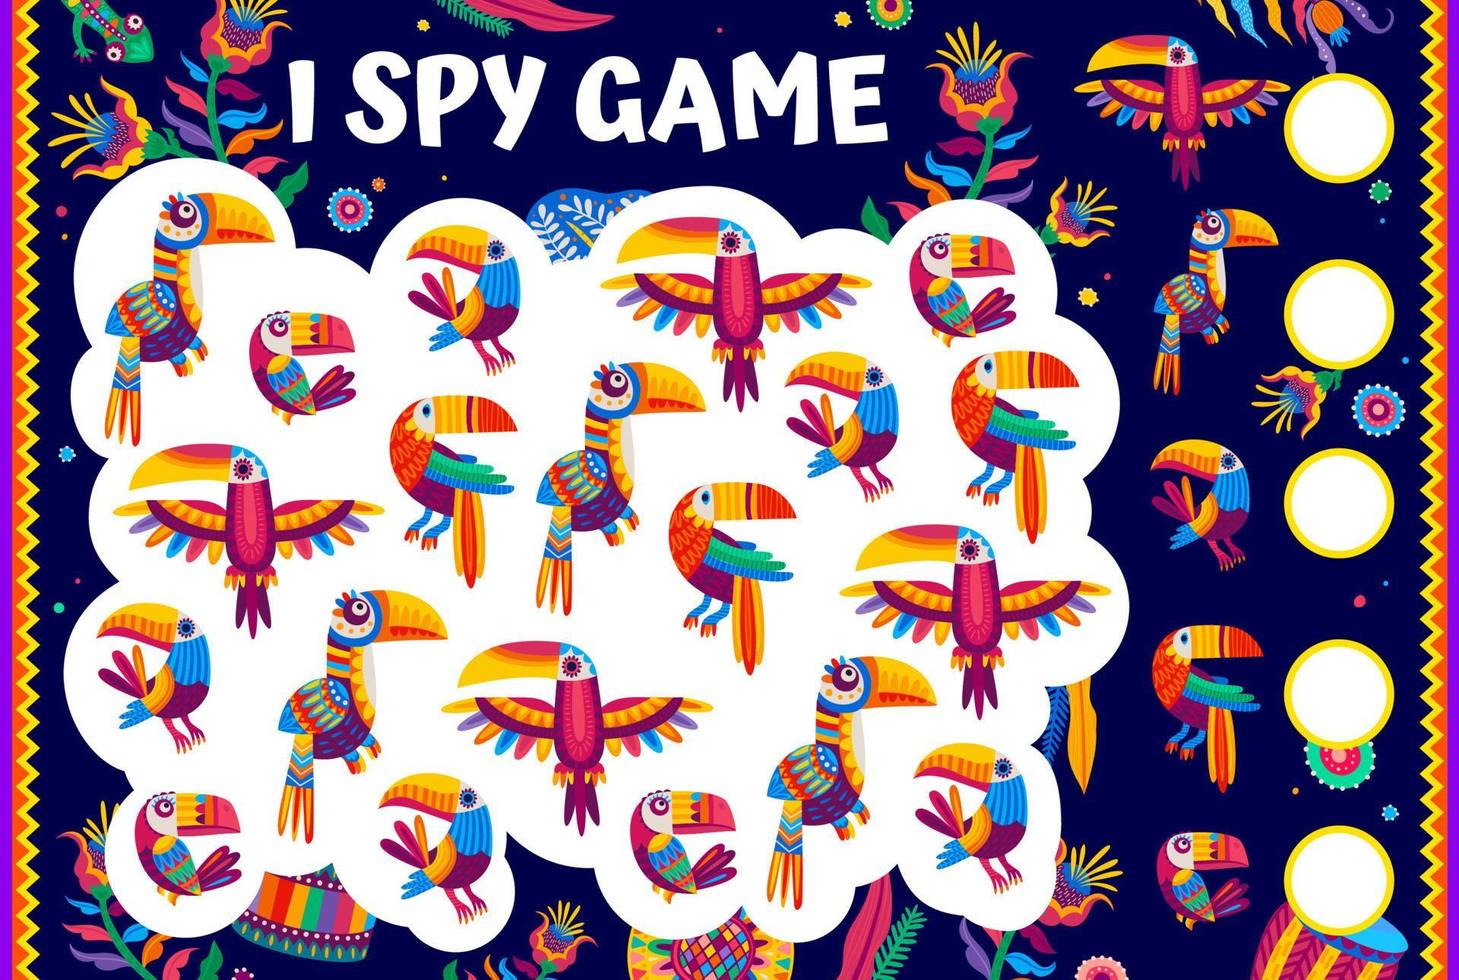 yo espía juego hoja de cálculo, mexicano dibujos animados tucán aves vector